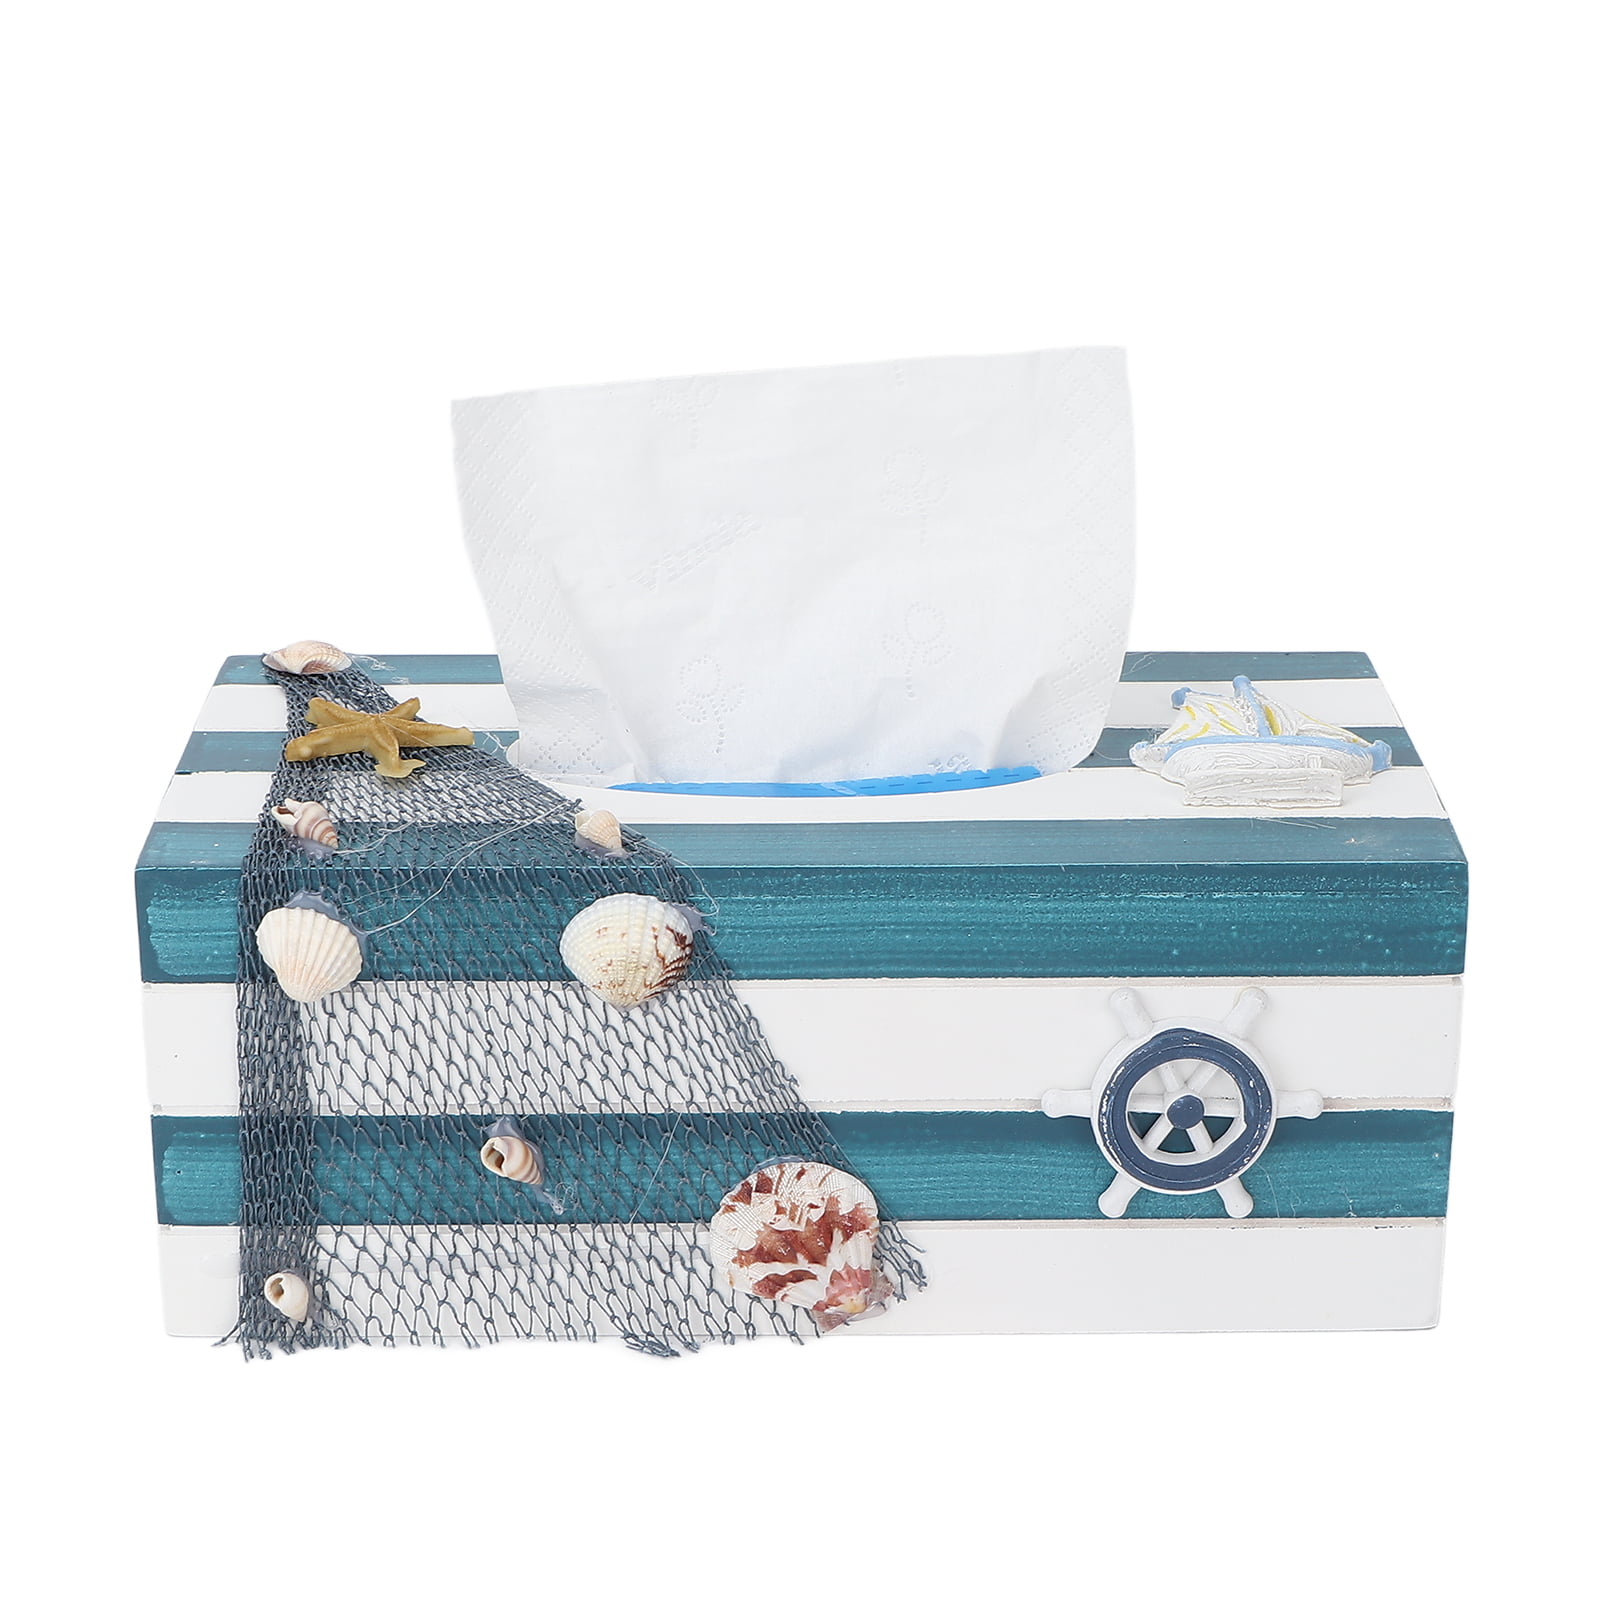 Popular Bath Gazelle Animal Print Bathroom Resin Tissue Box Cover 